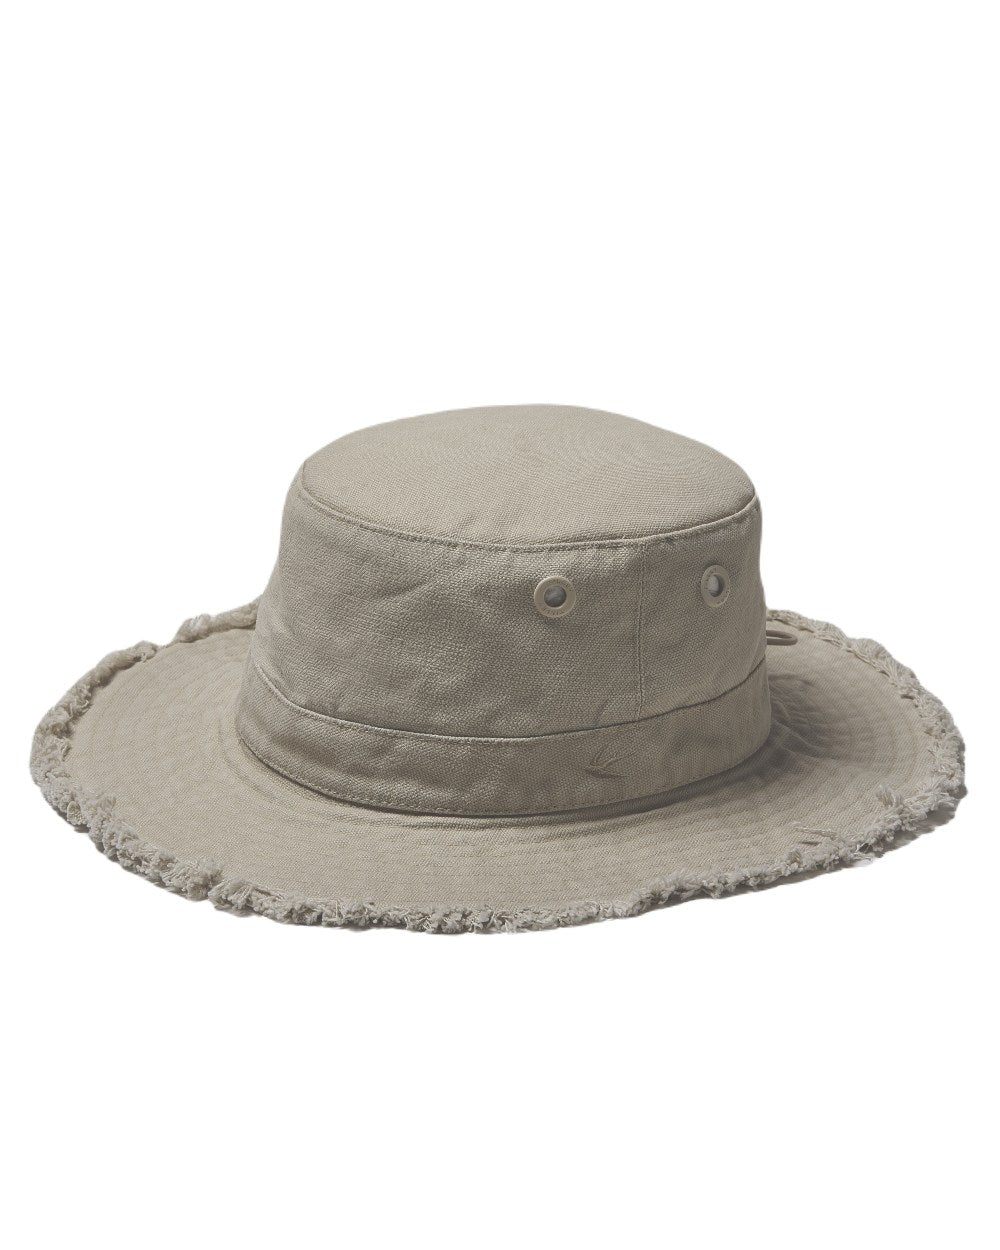 Stone Coloured Tilley Hat Fringe Wanderer On A White Background 